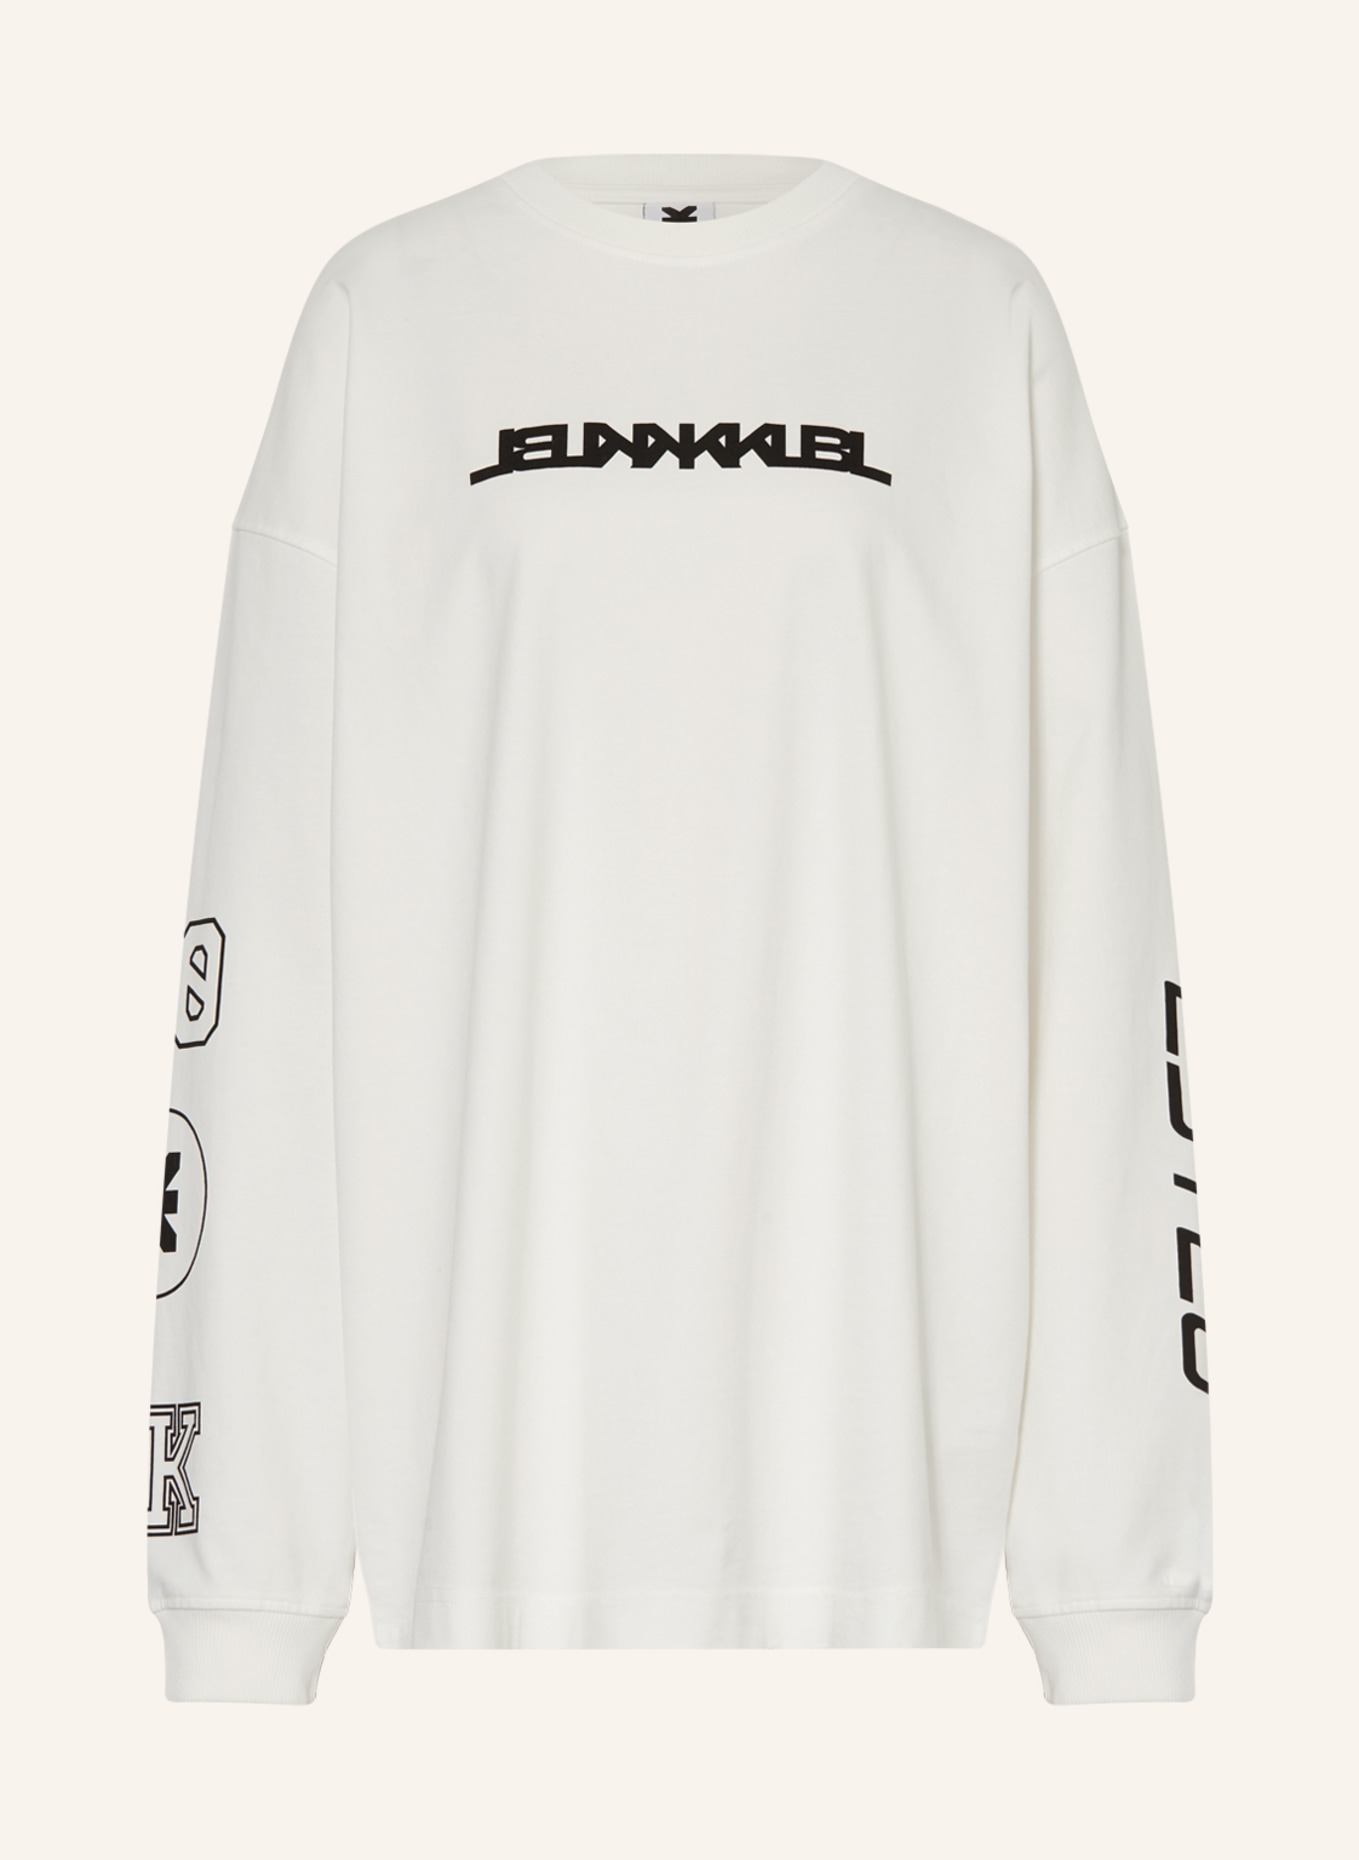 KARO KAUER Oversized-Sweatshirt, Farbe: WEISS (Bild 1)